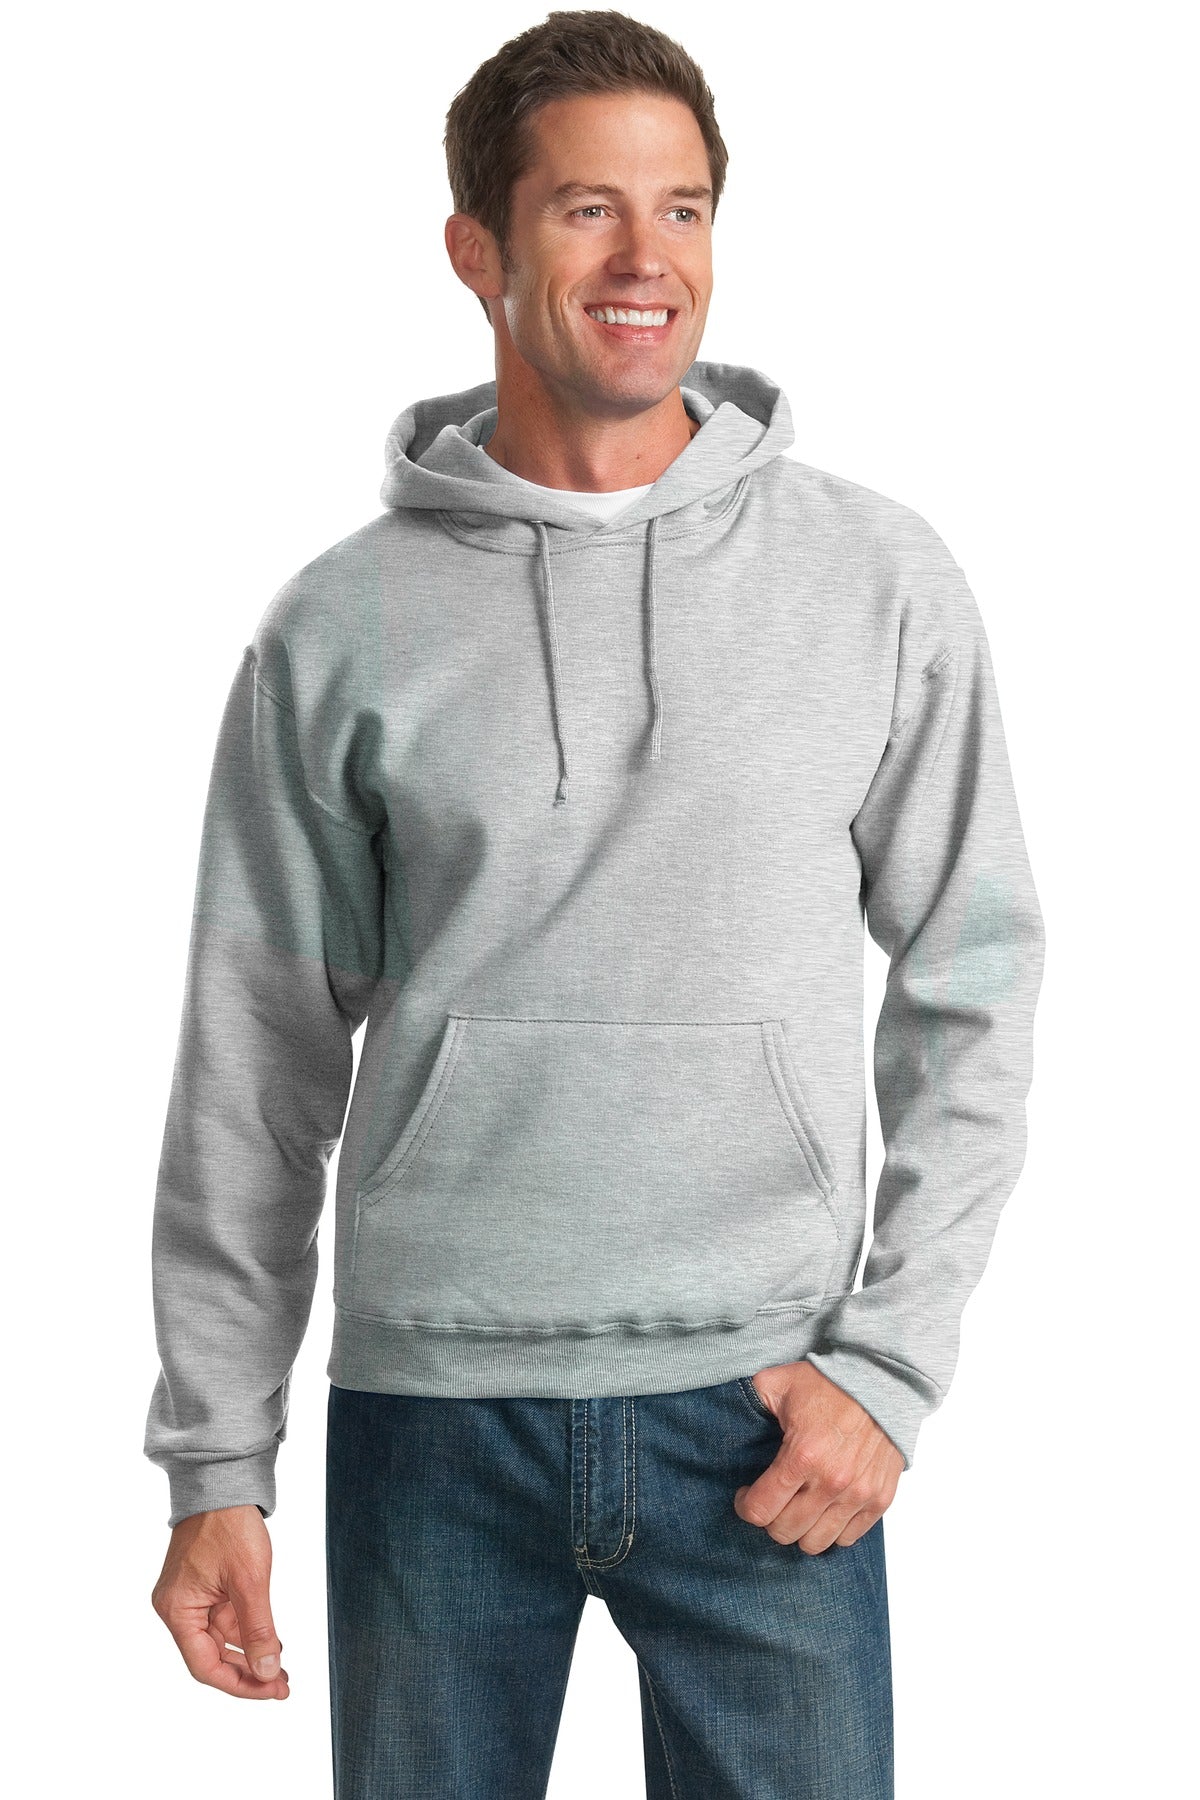 JERZEES® - NuBlend® Pullover Hooded Sweatshirt. 996M - DFW Impression